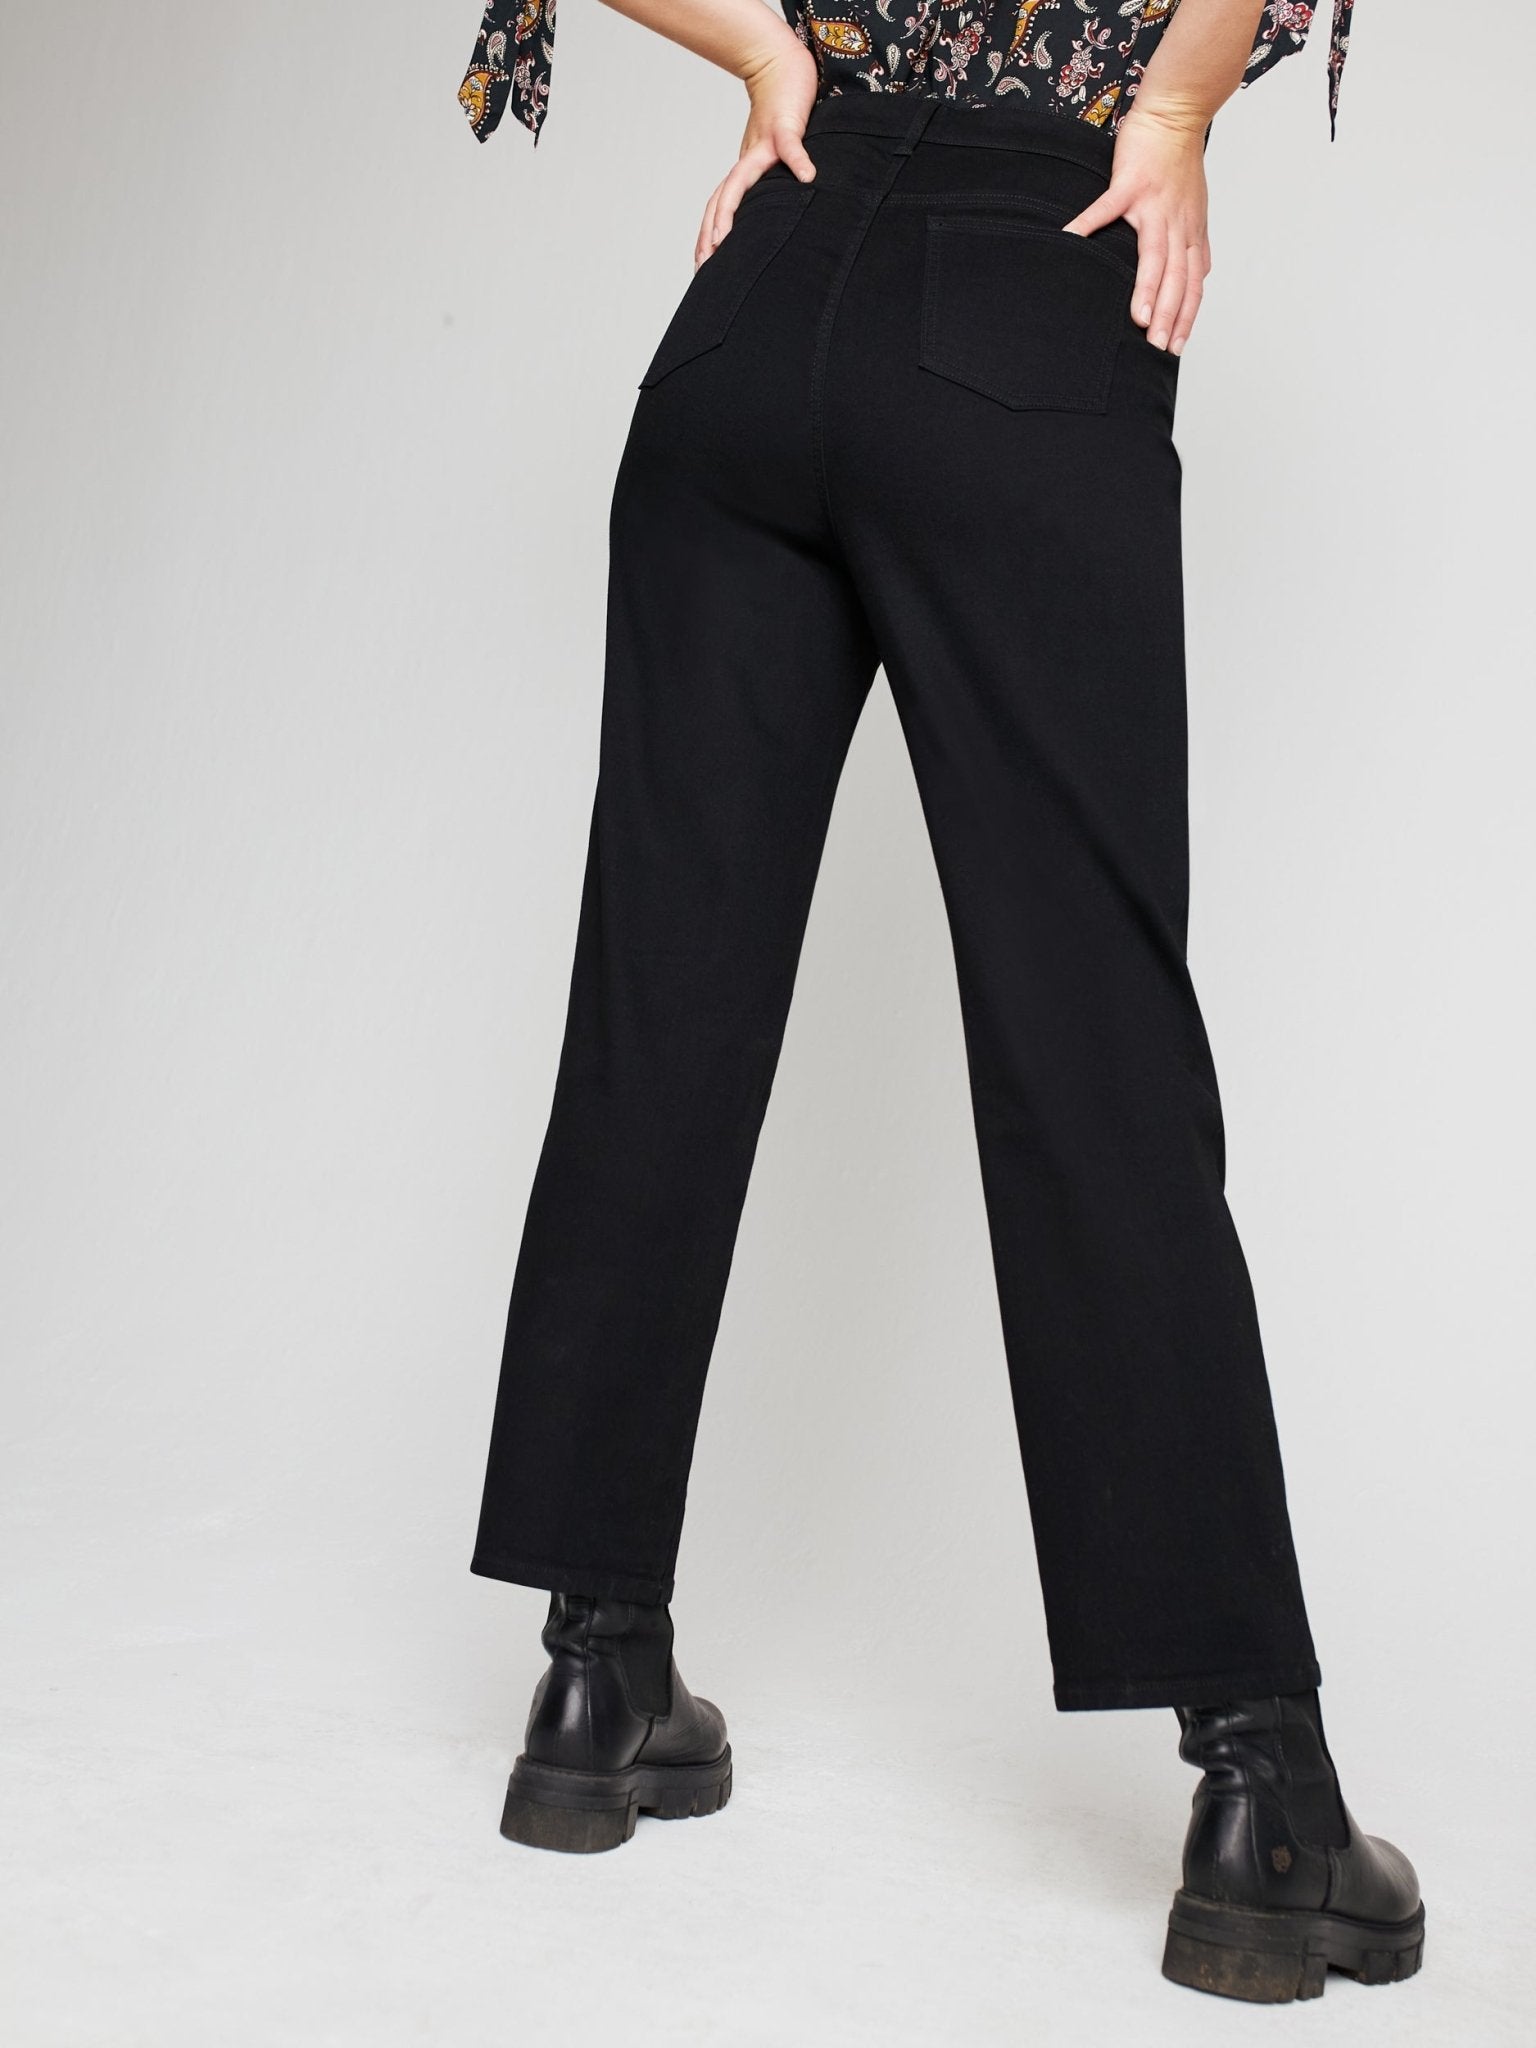 Westport Signature Black Straight Leg Jeans - DressbarnClothing